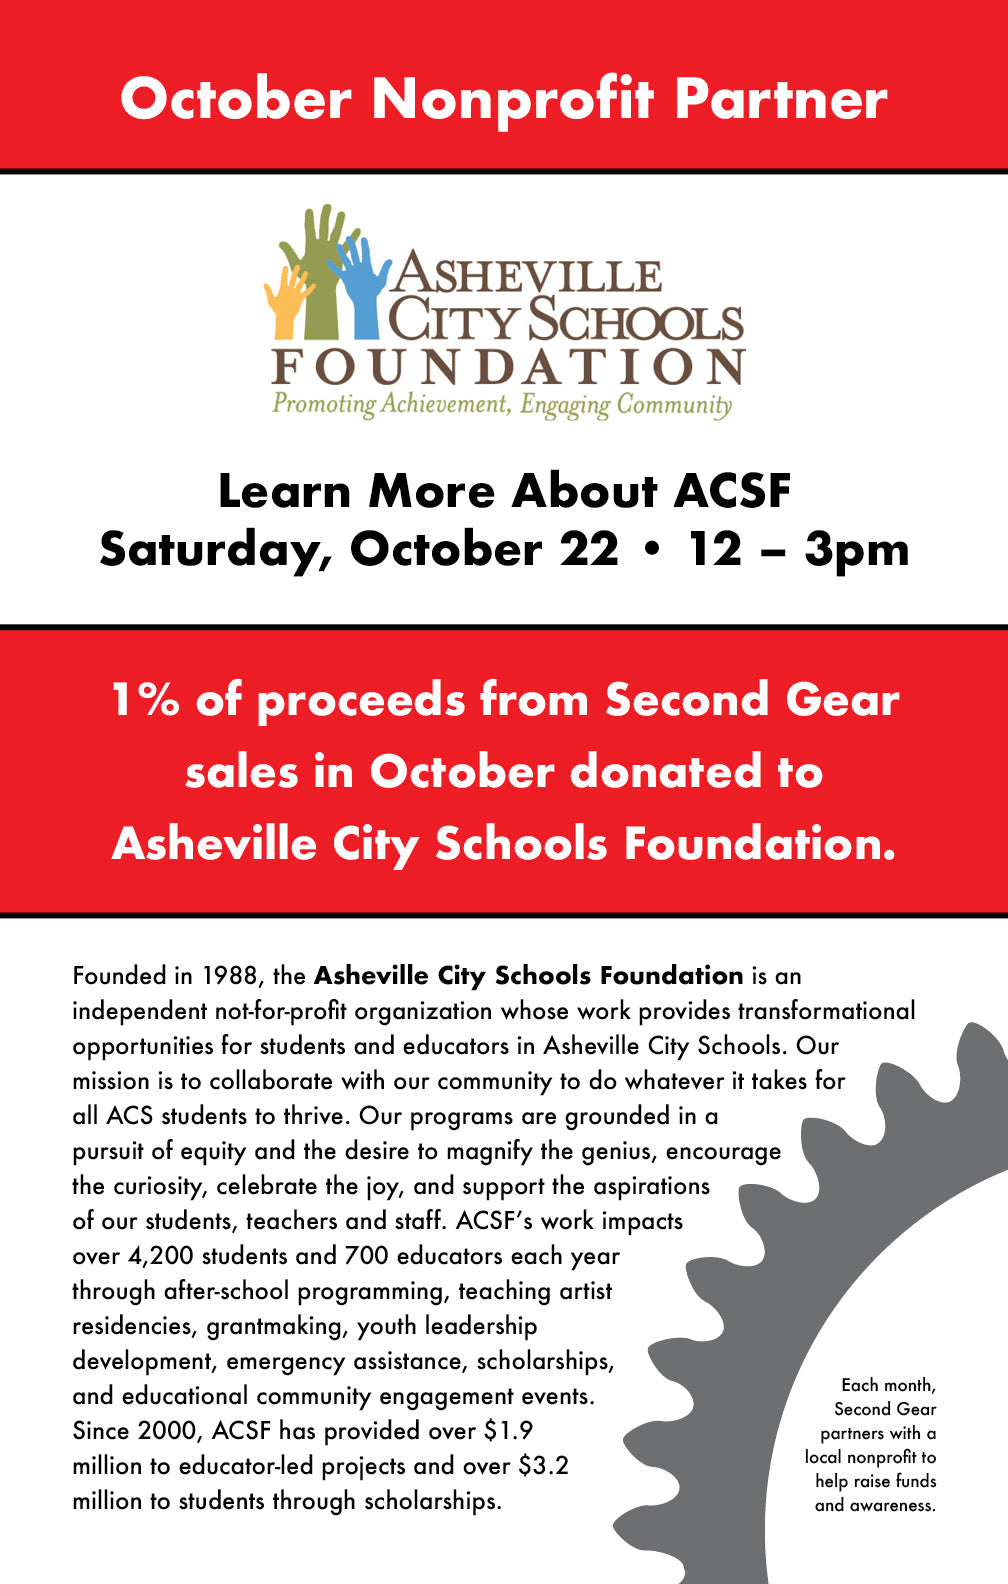 Second Gear's October Nonprofit Asheville City Schools Foundation